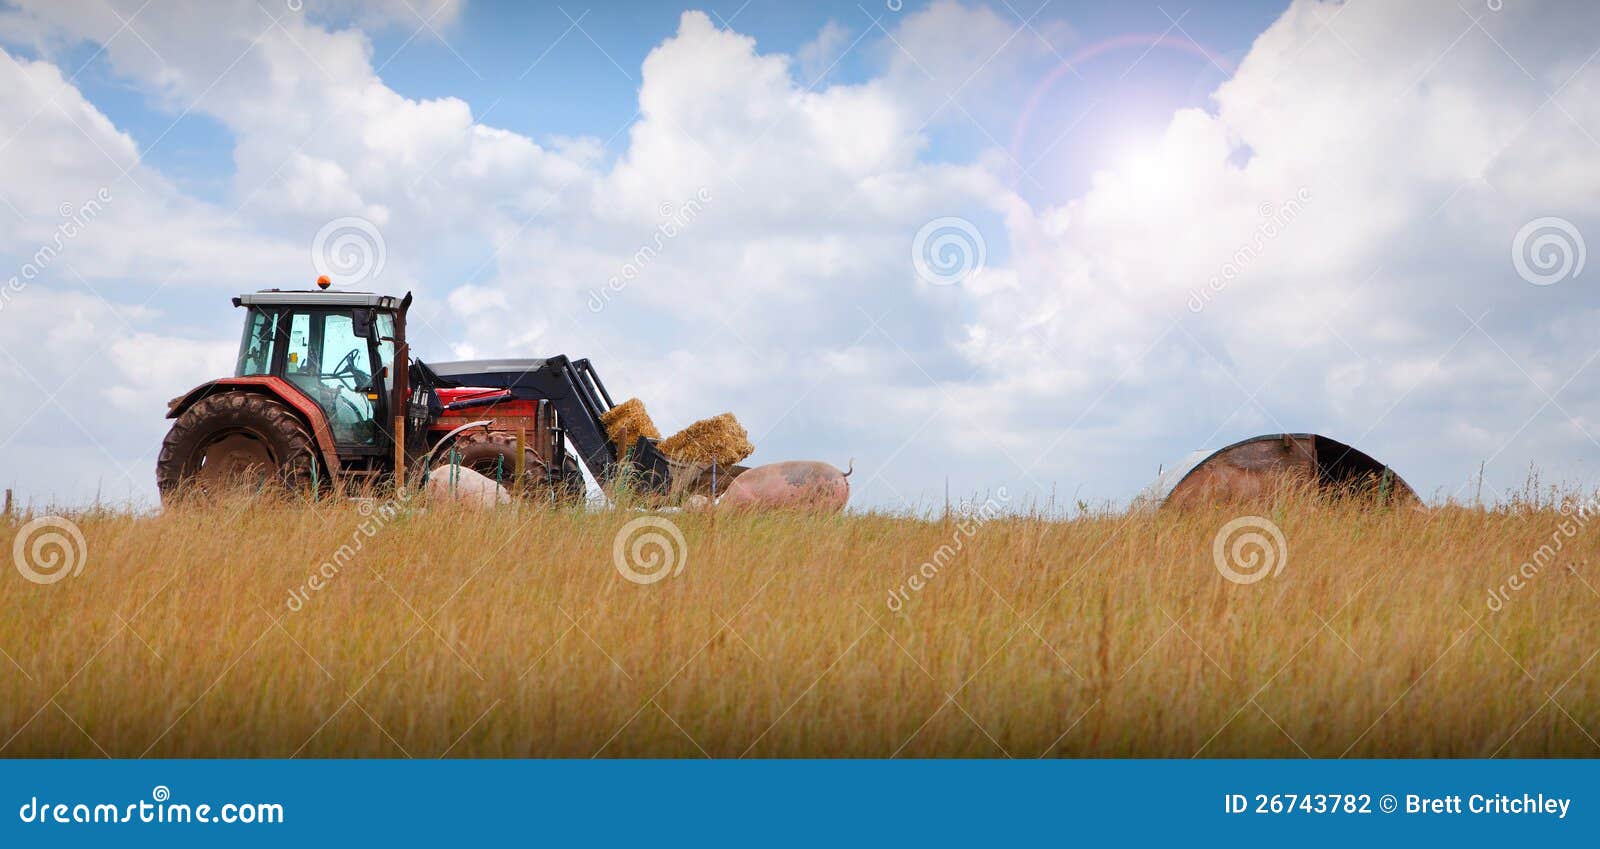 tractor on farm landscape